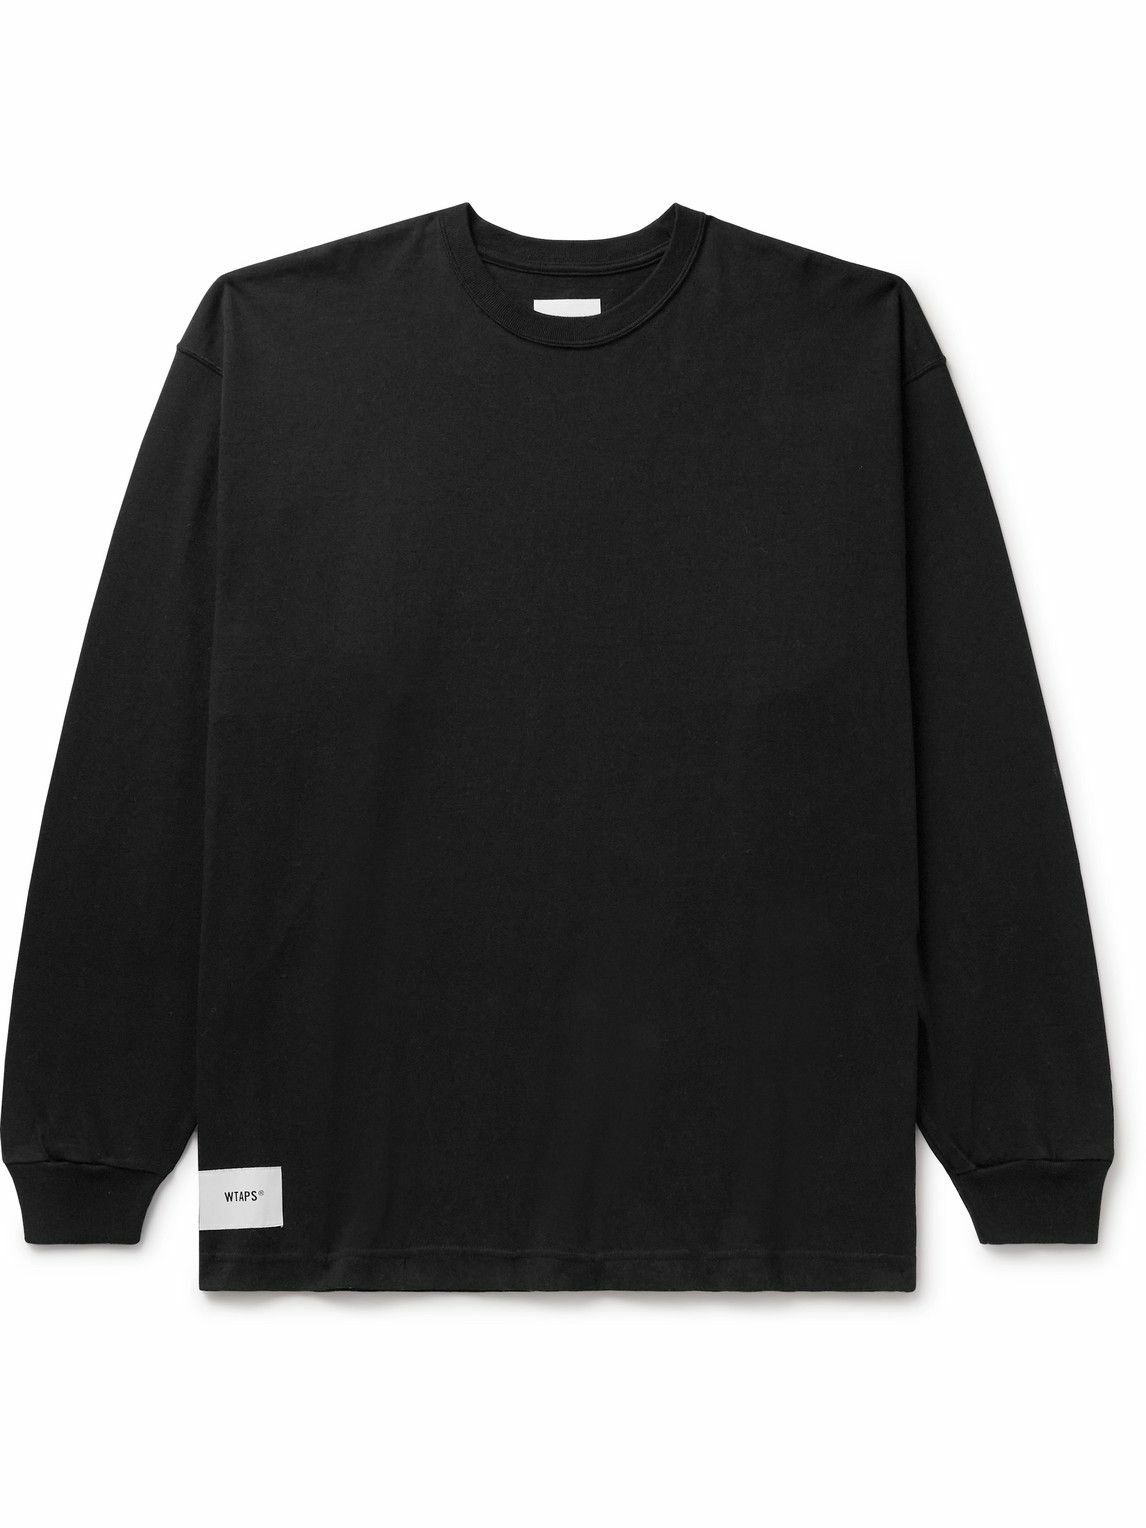 WTAPS - Logo-Appliquéd Embroidered Cotton-Jersey T-Shirt - Black WTAPS